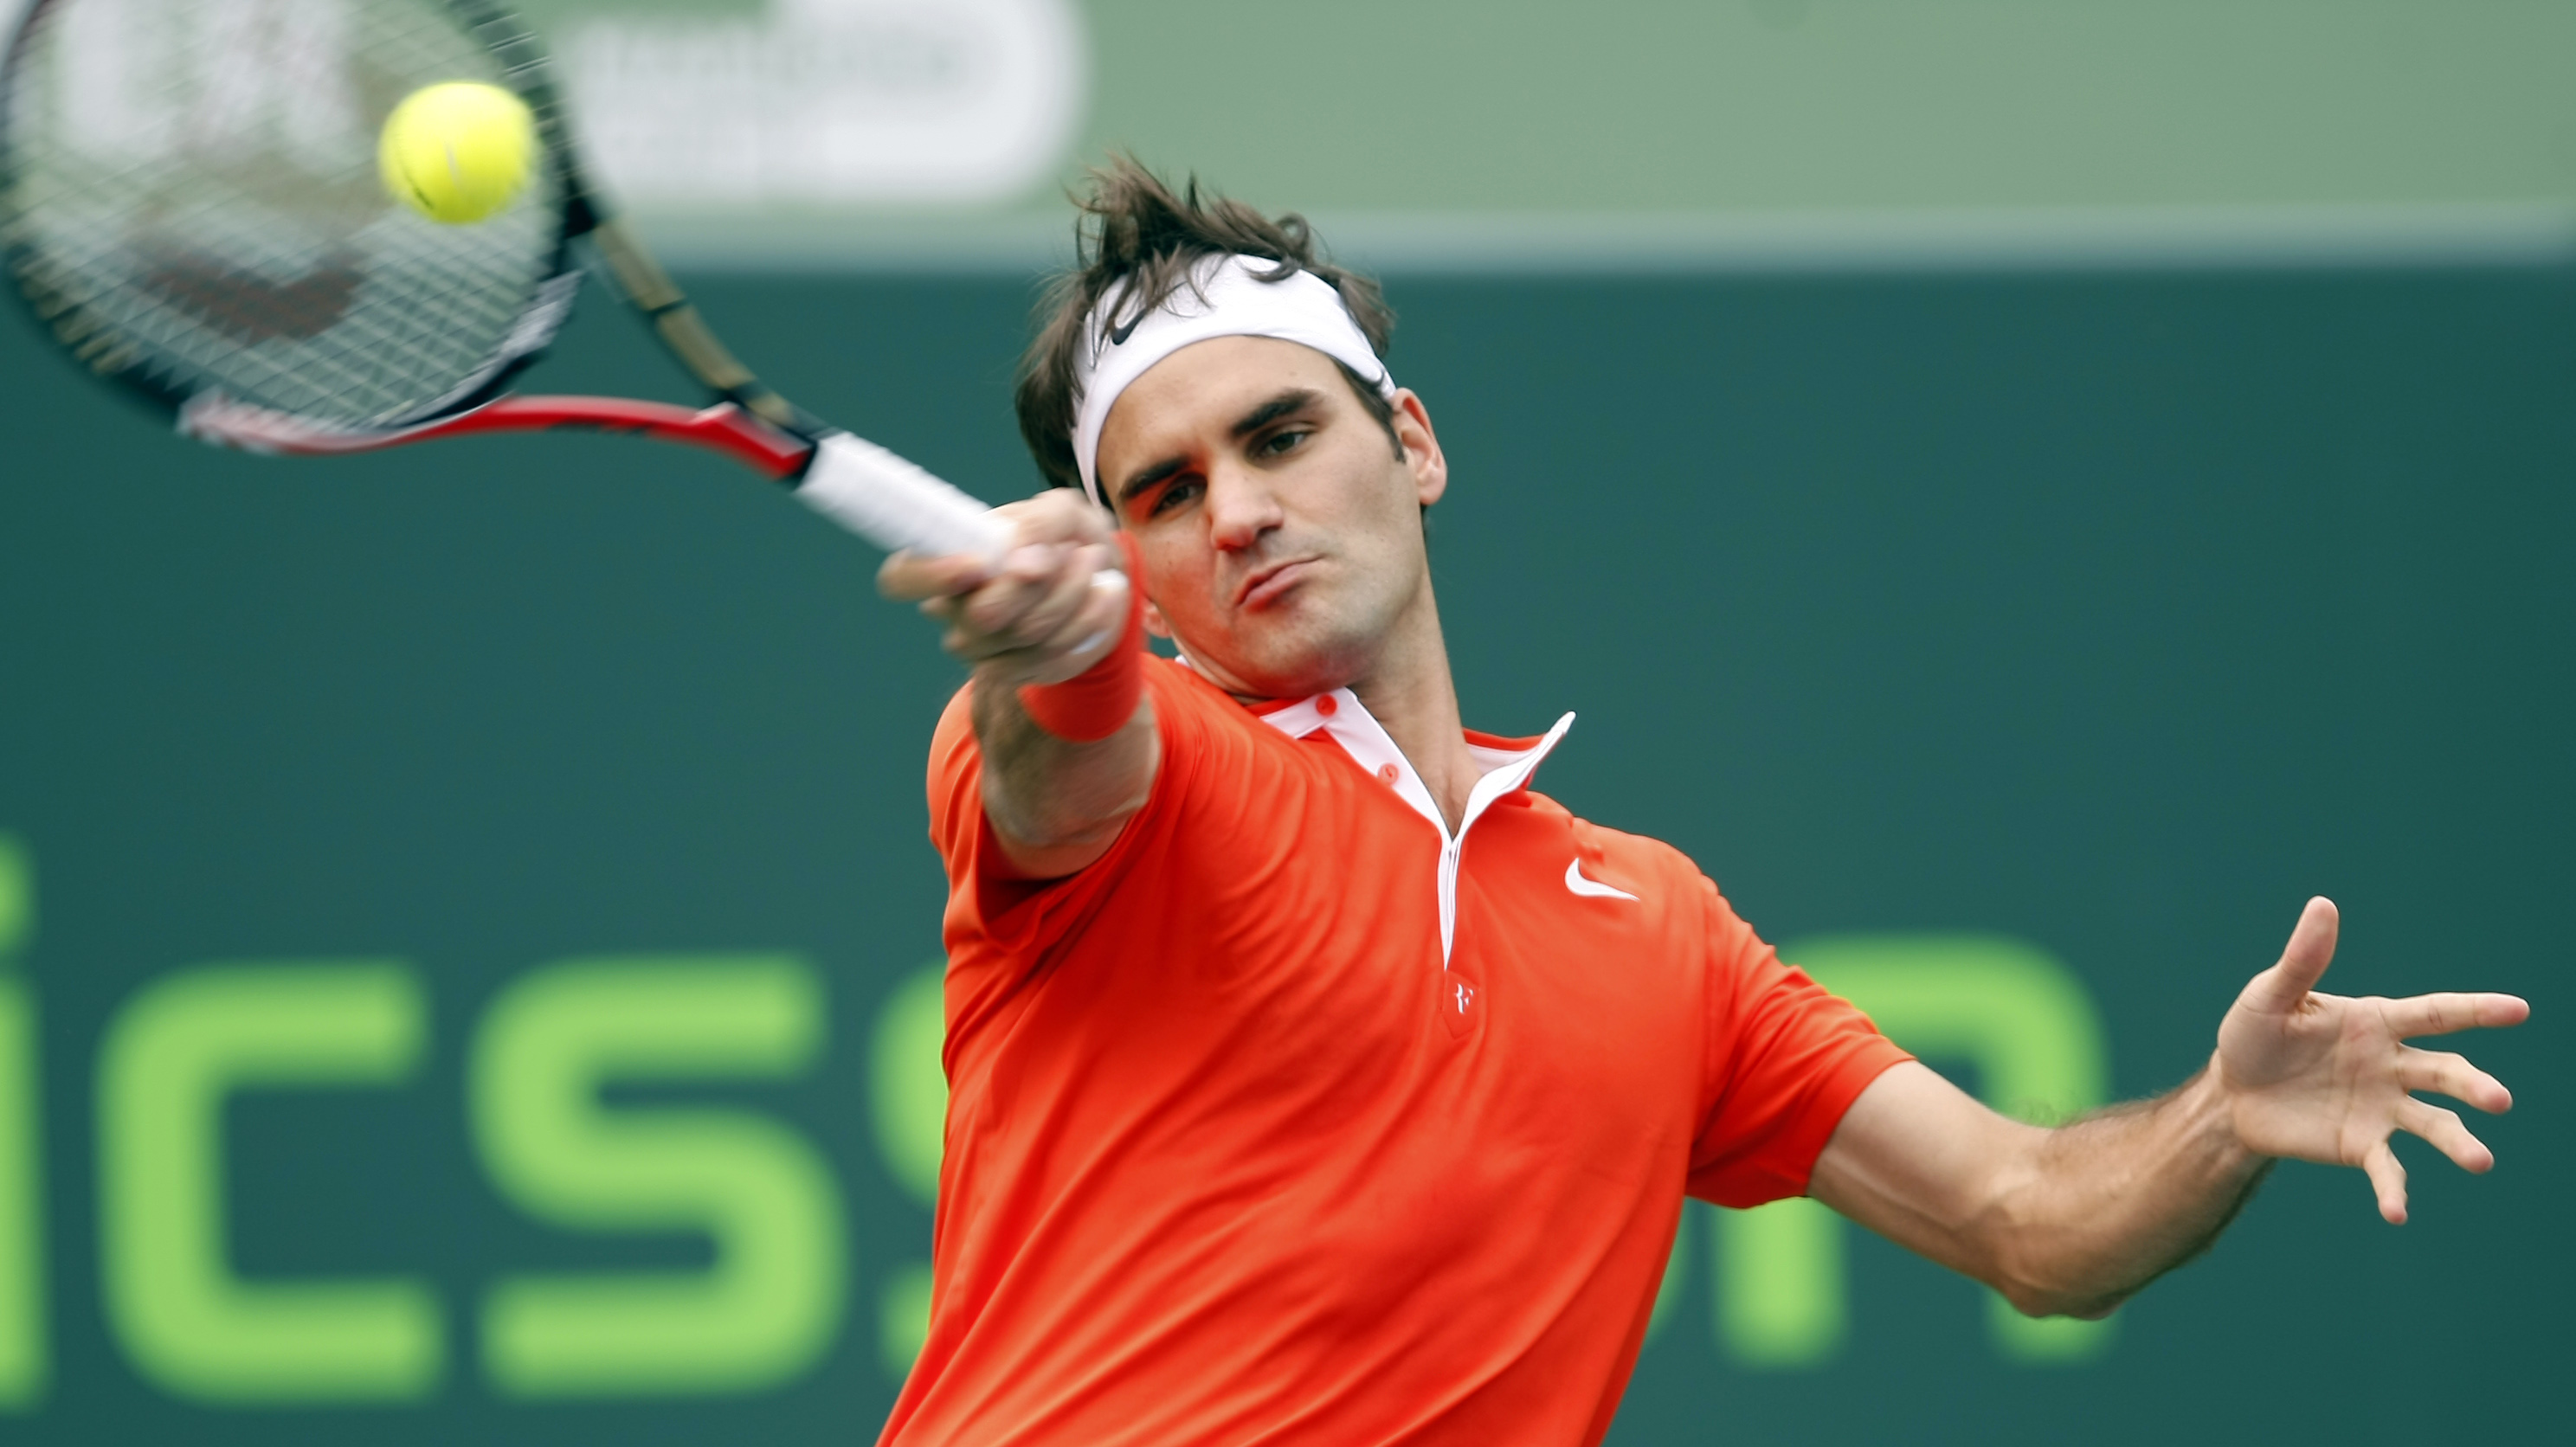 ATP, Tennis, Miami, Roger Federer